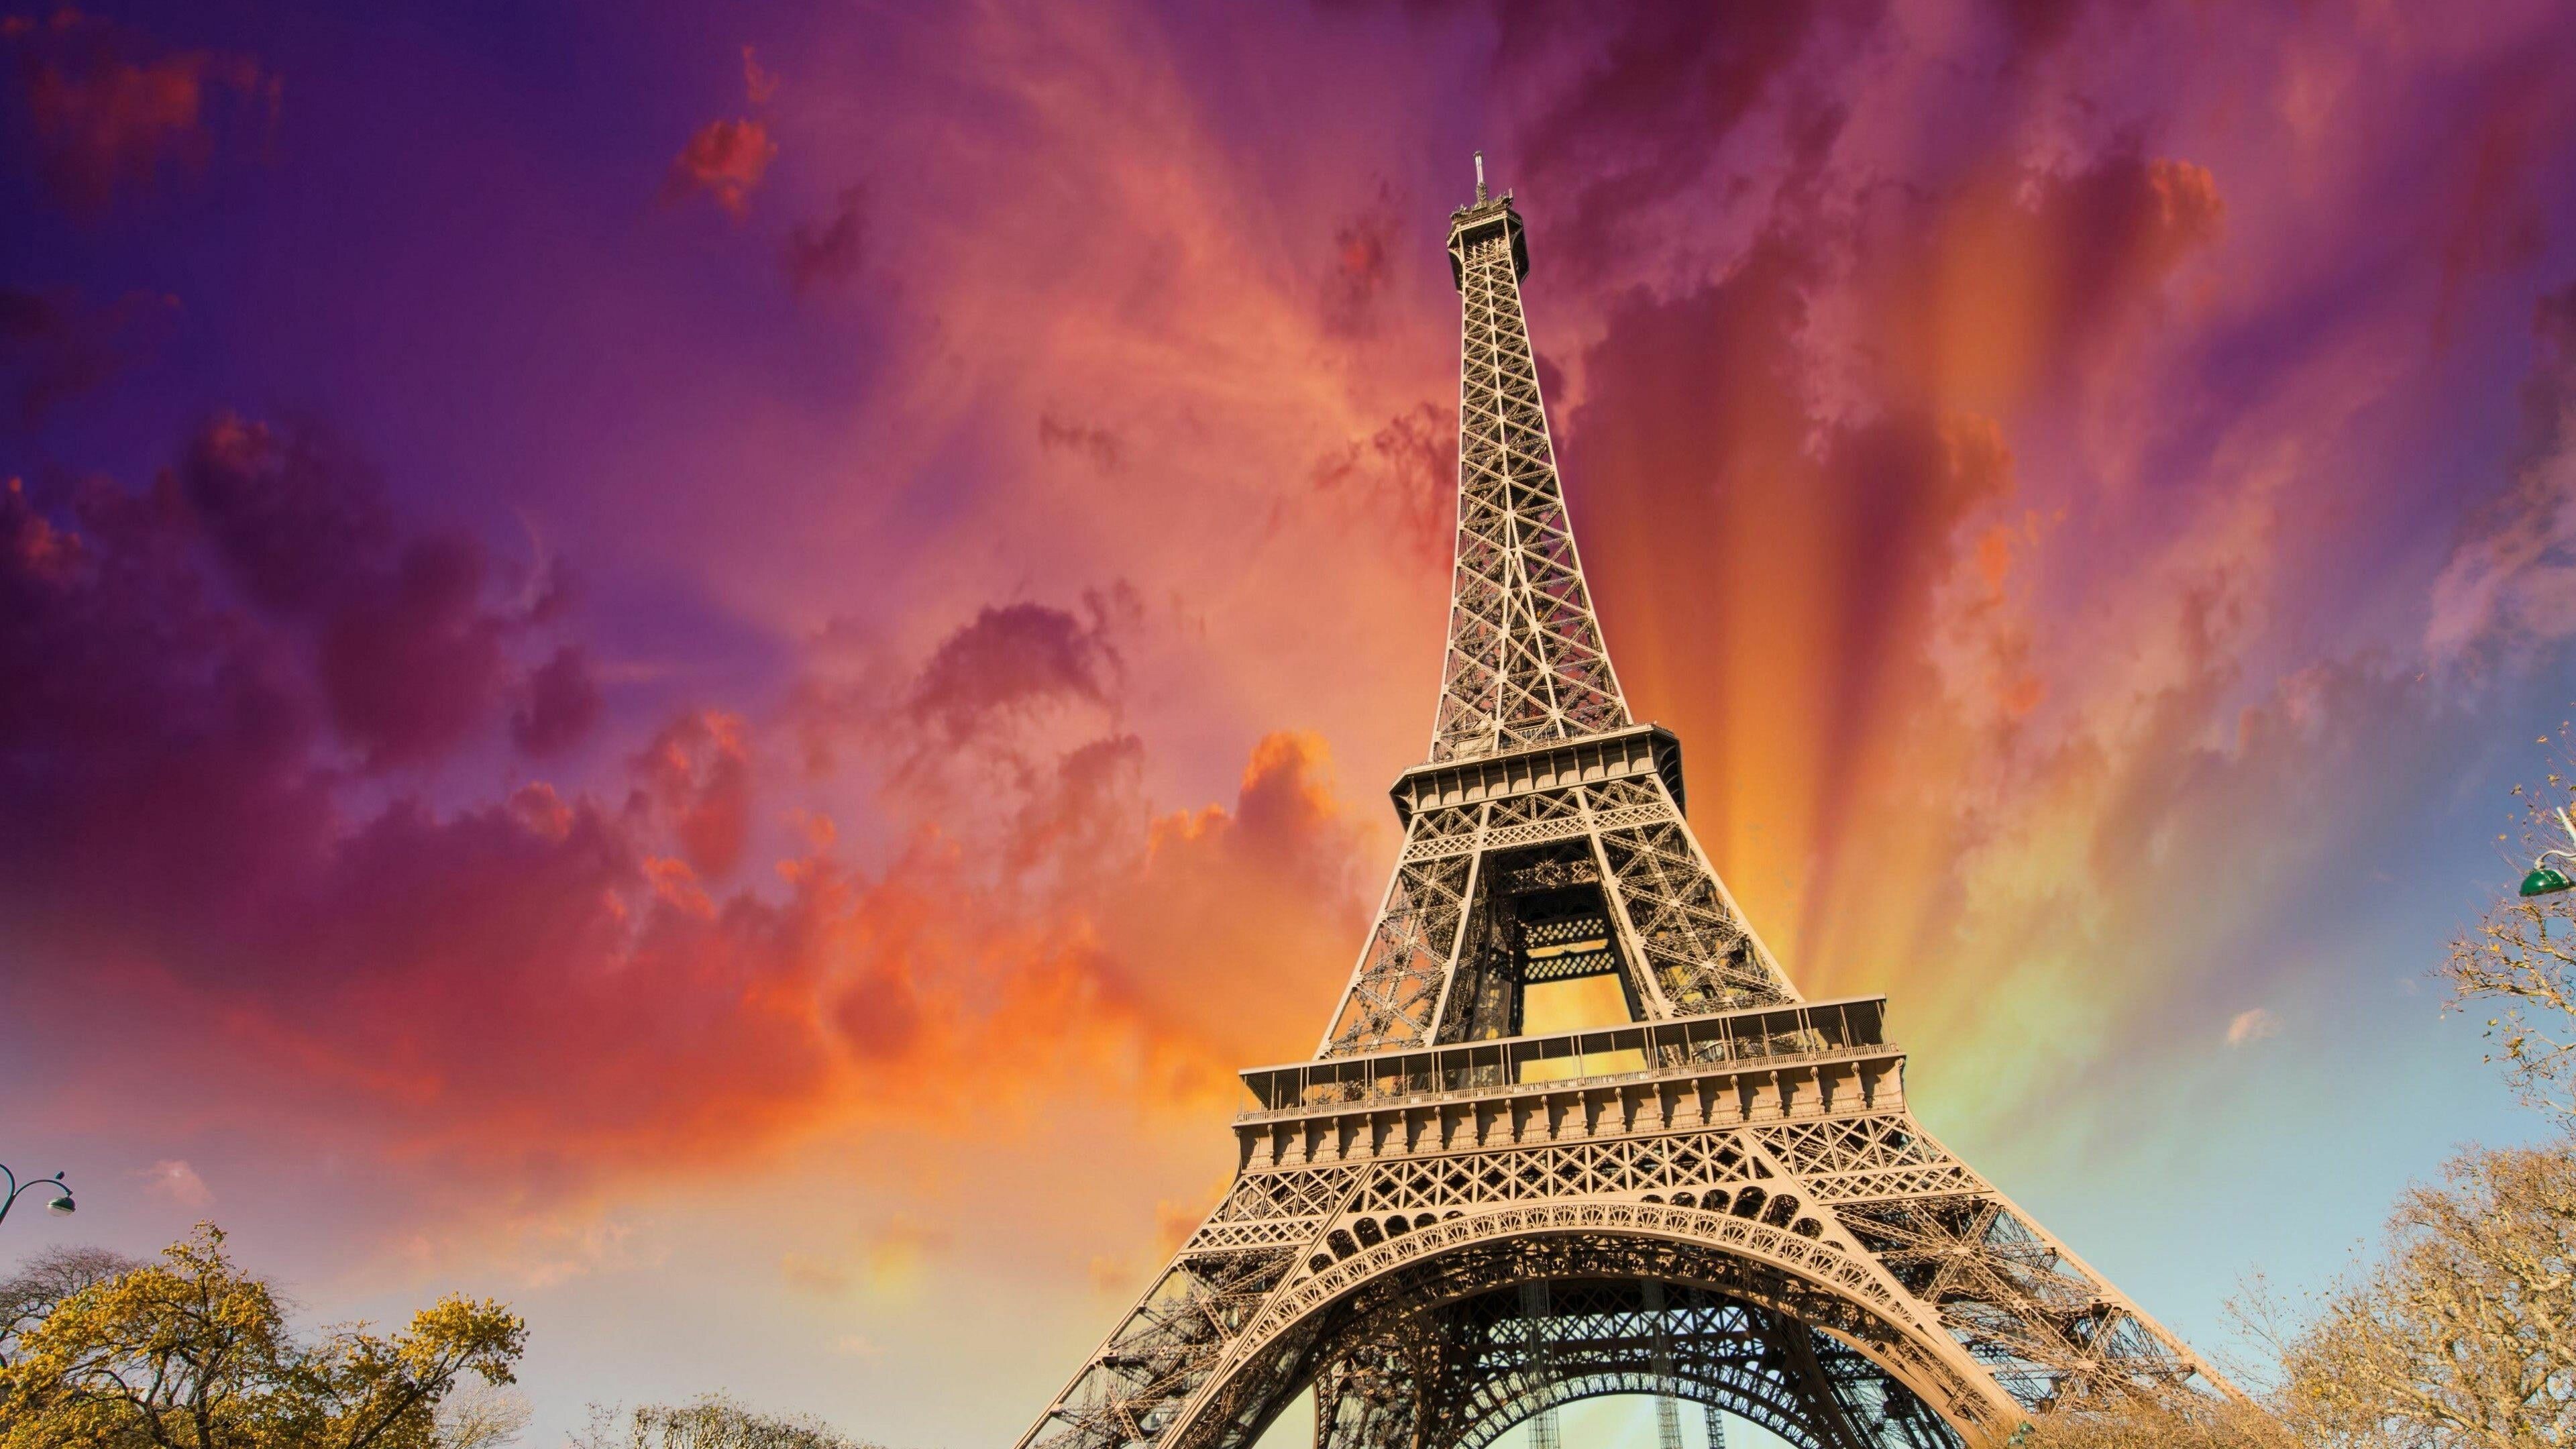 Eiffel Tower: A wrought-iron lattice structure on the Champ de Mars in Paris, France. 3840x2160 4K Wallpaper.